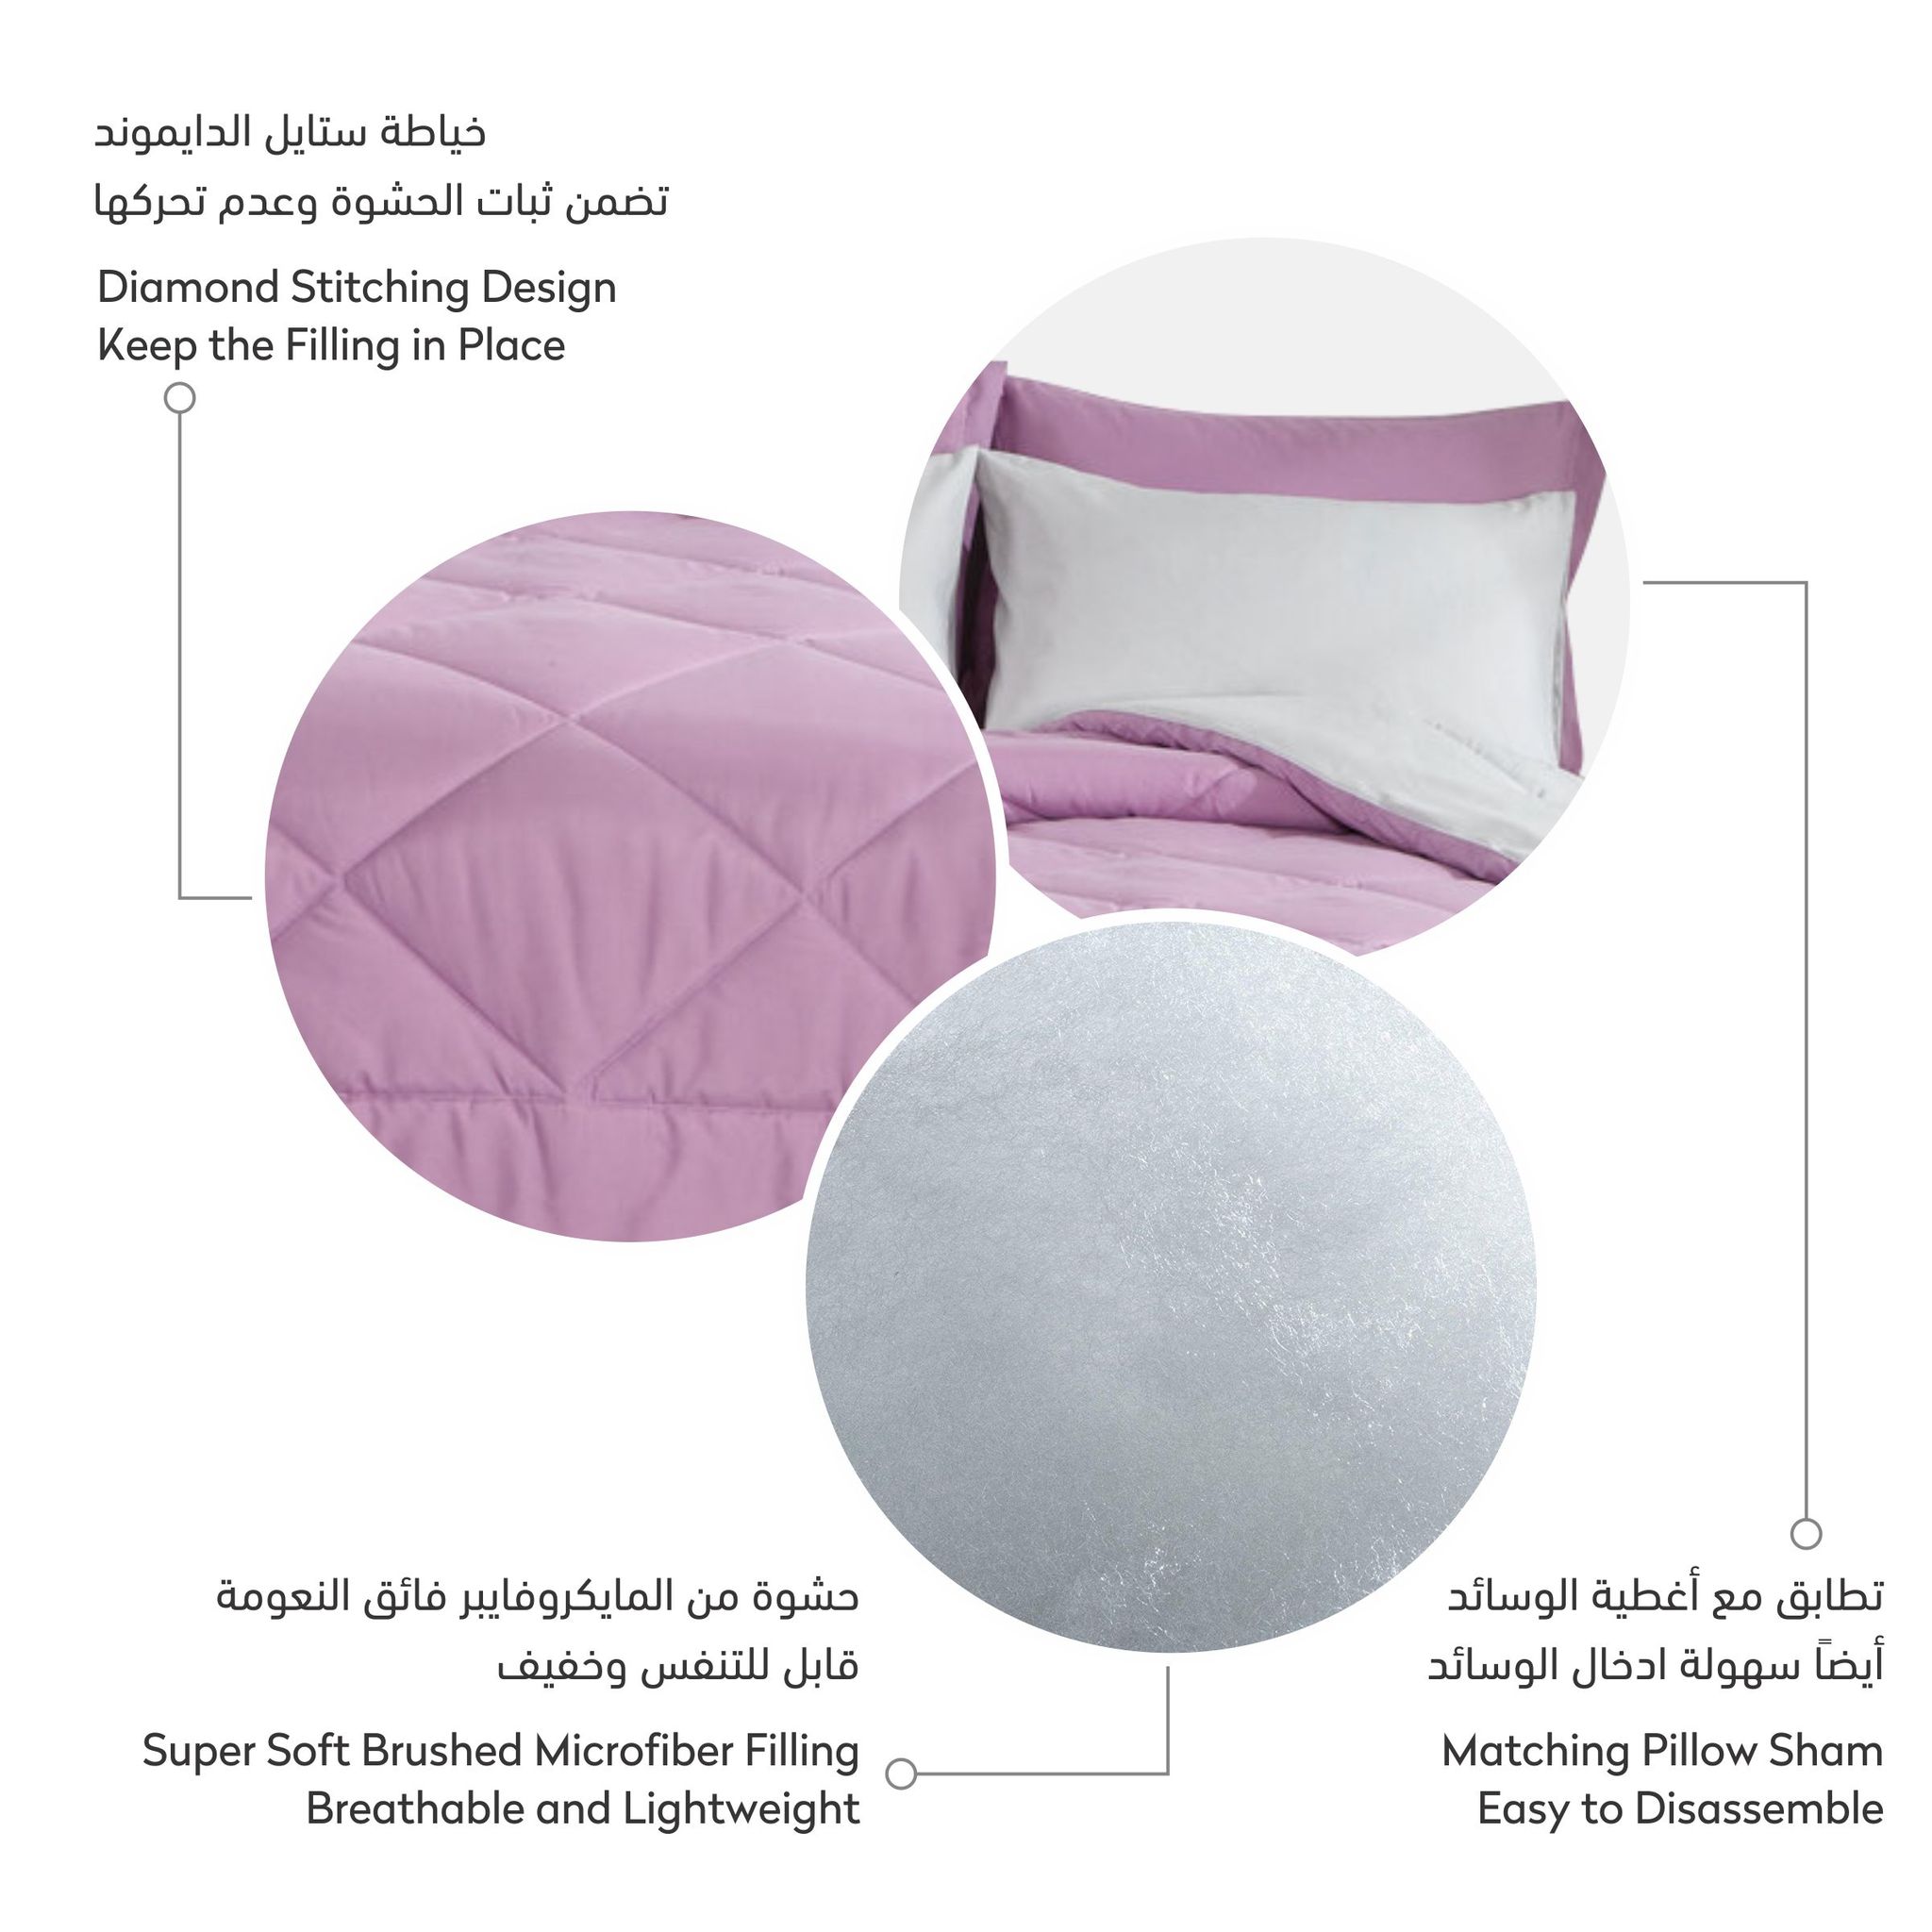 Diamond Quilted Reversible Comforter Set 4-Piece Single Pink/Light Grey